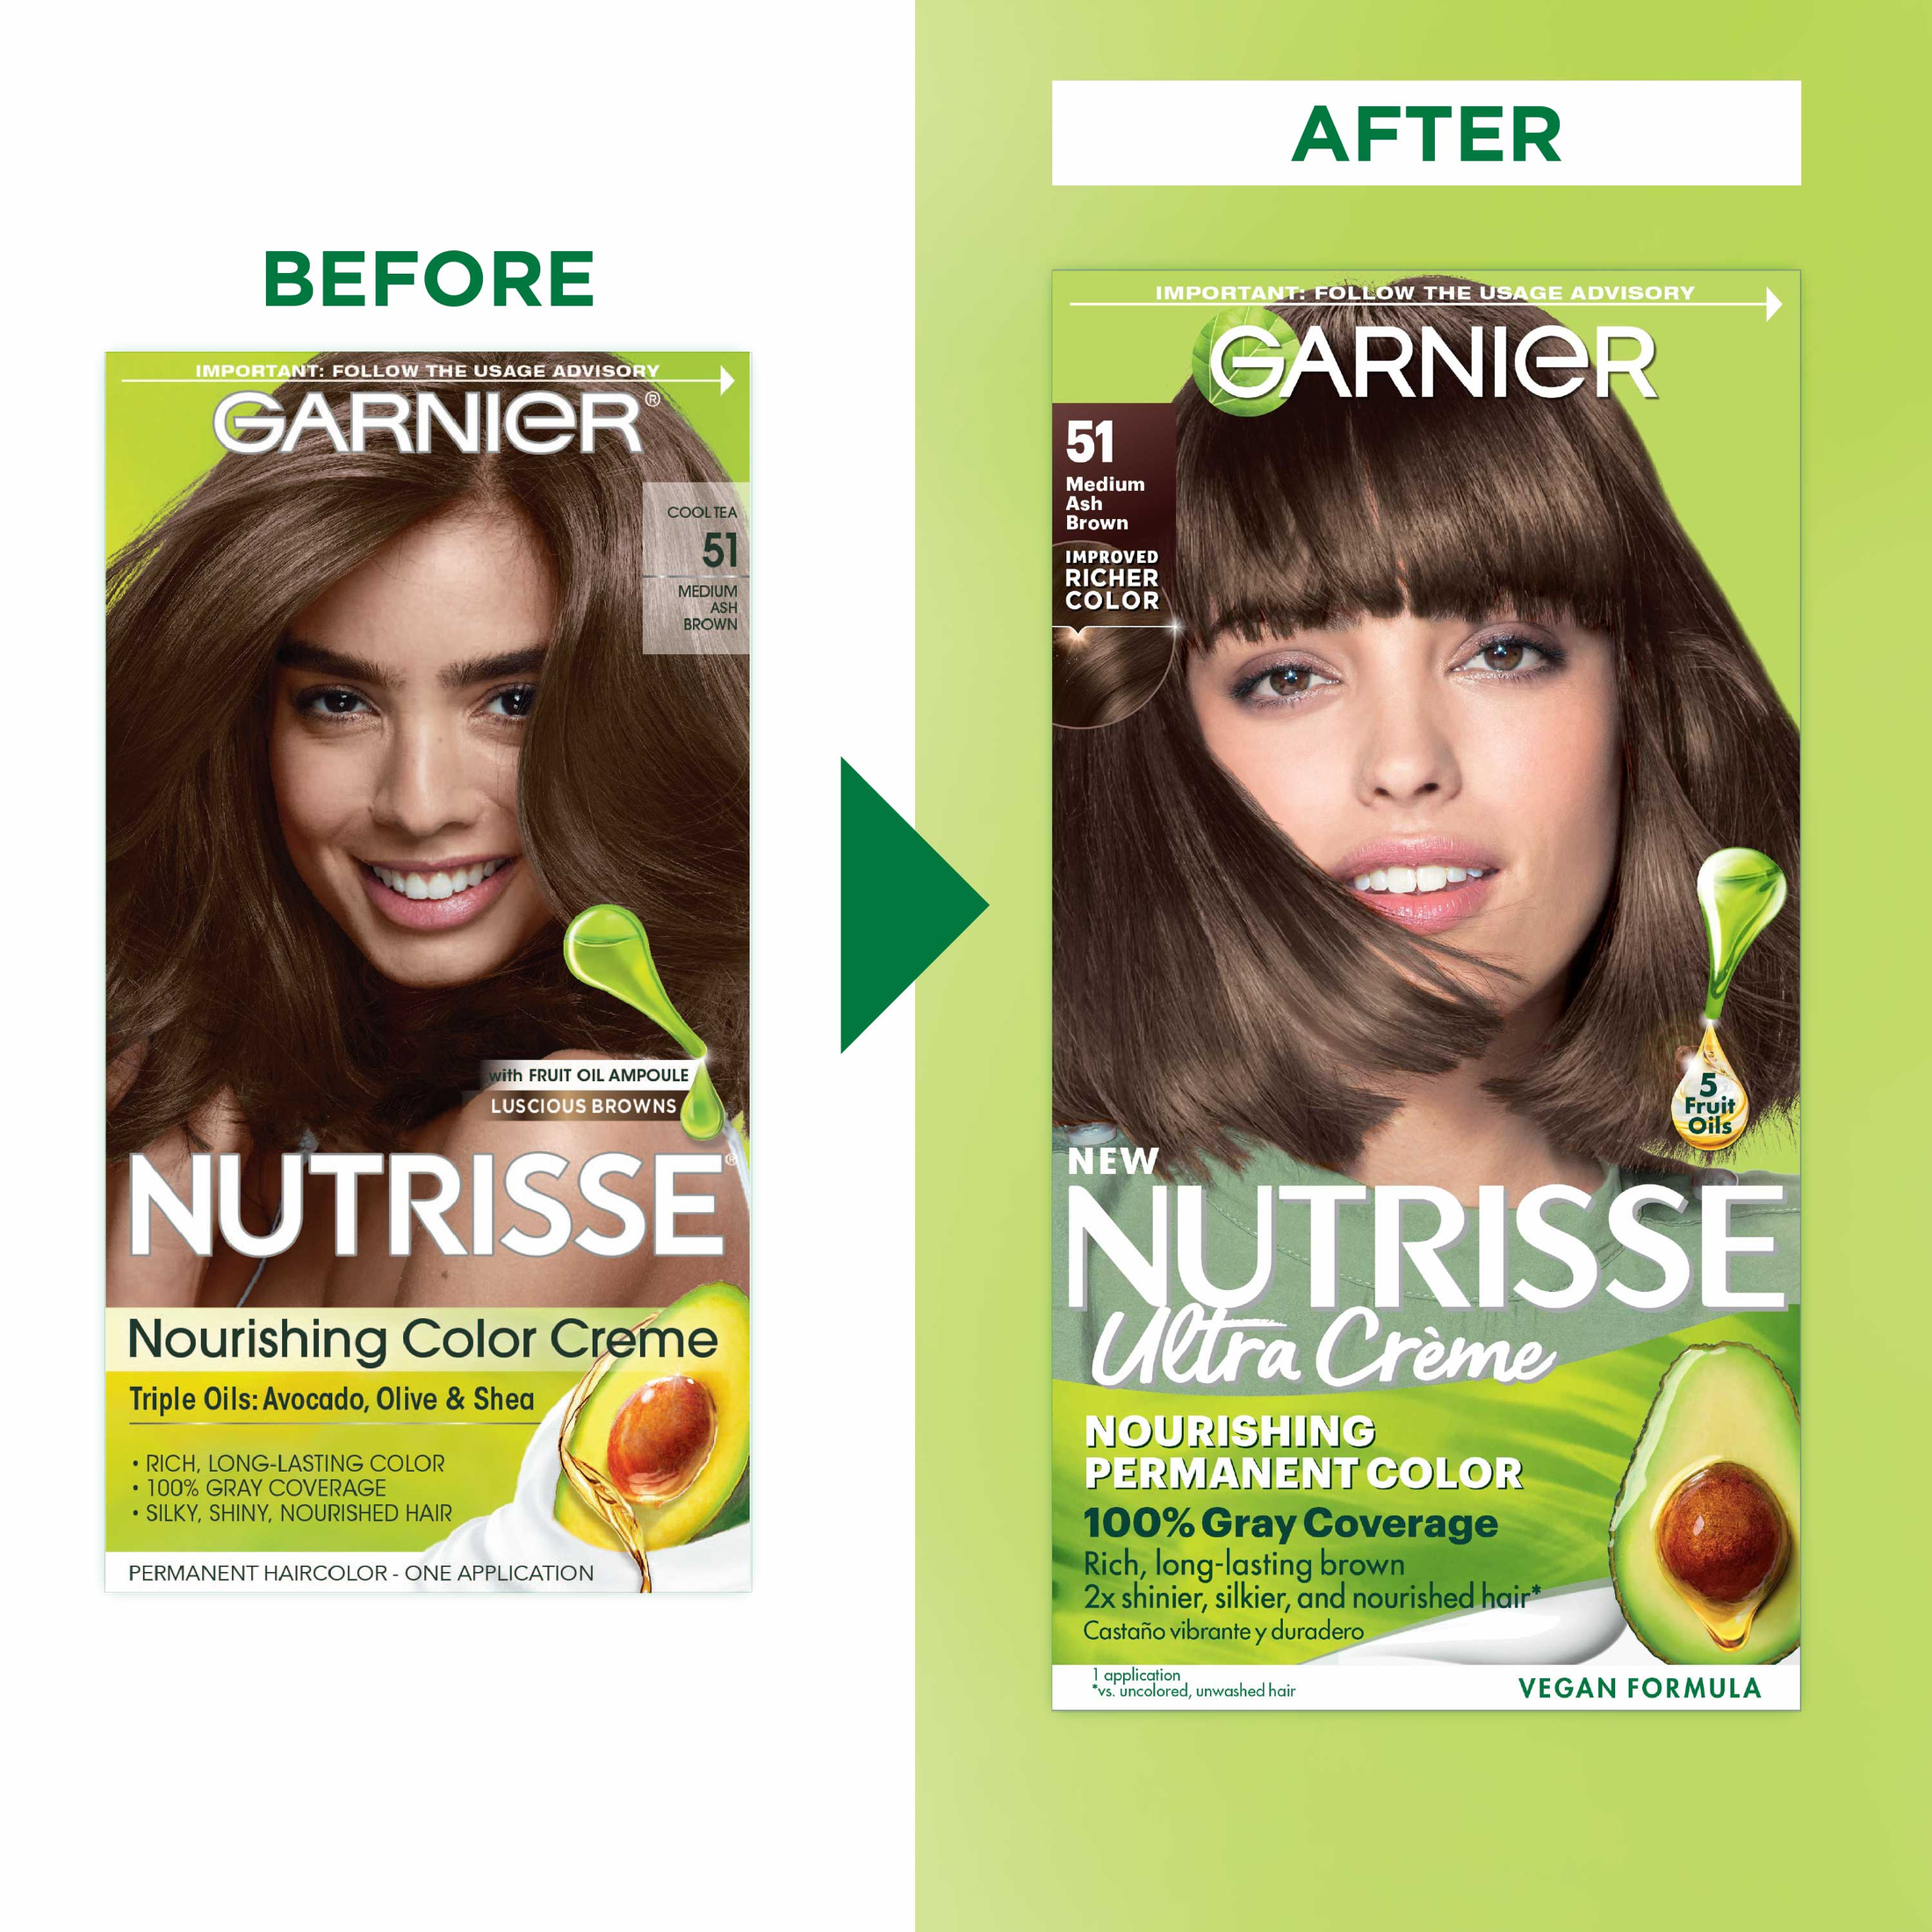 Garnier Nutrisse Nourishing Hair Color Creme, 051 Medium Ash Brown Cool Tea - image 3 of 11